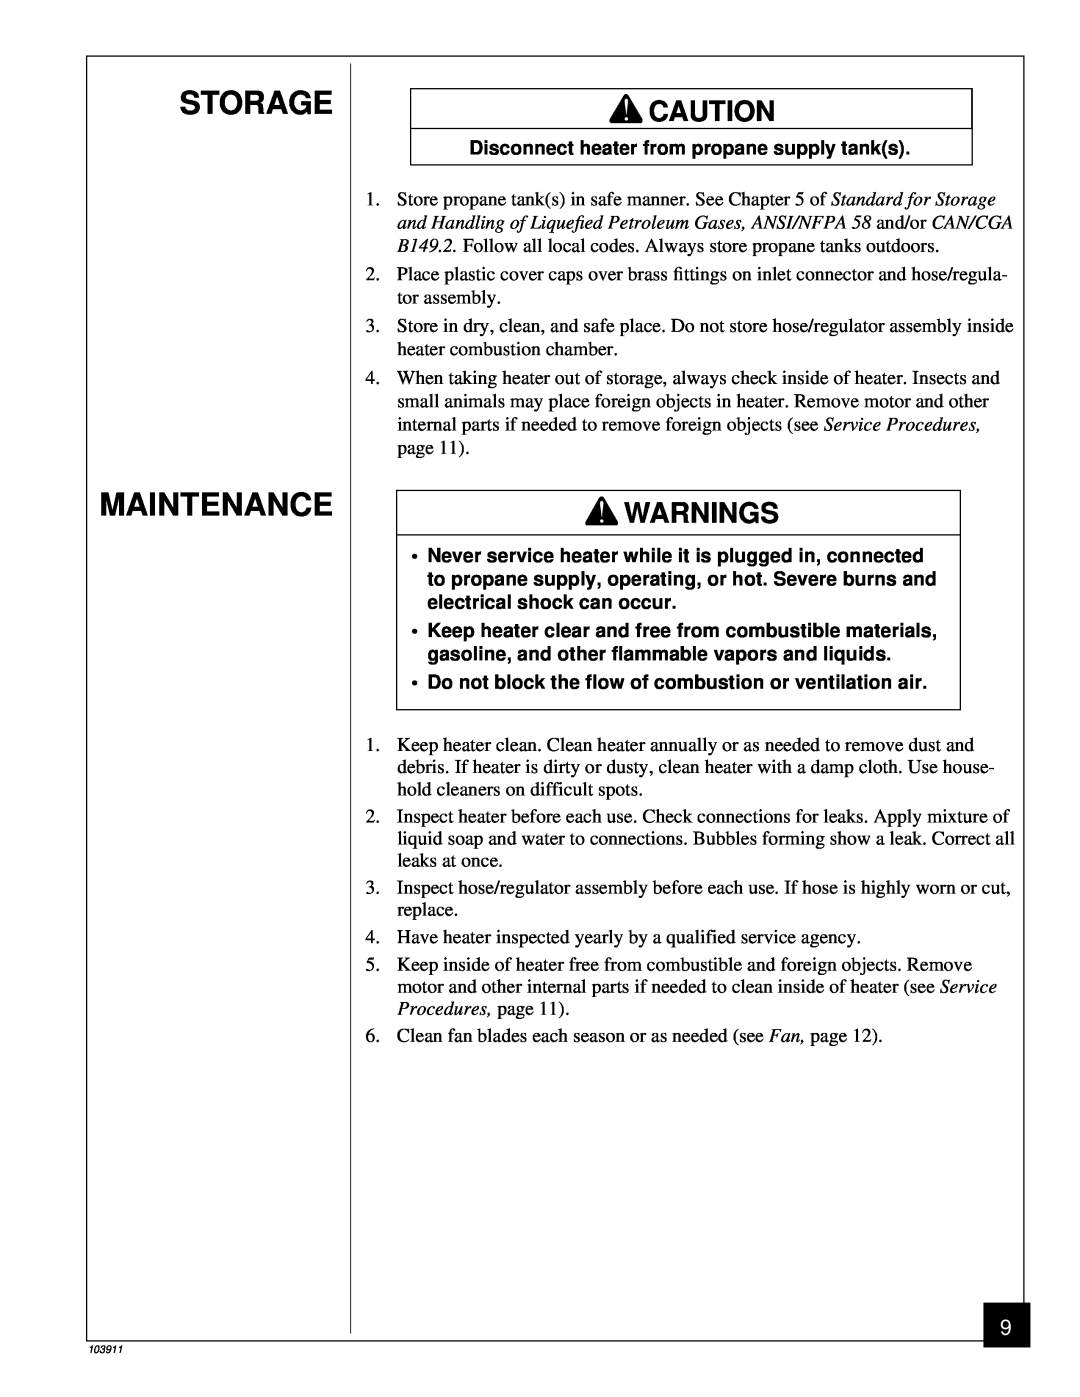 Desa RCLP50B owner manual Storage Maintenance, Warnings, Disconnect heater from propane supply tanks 